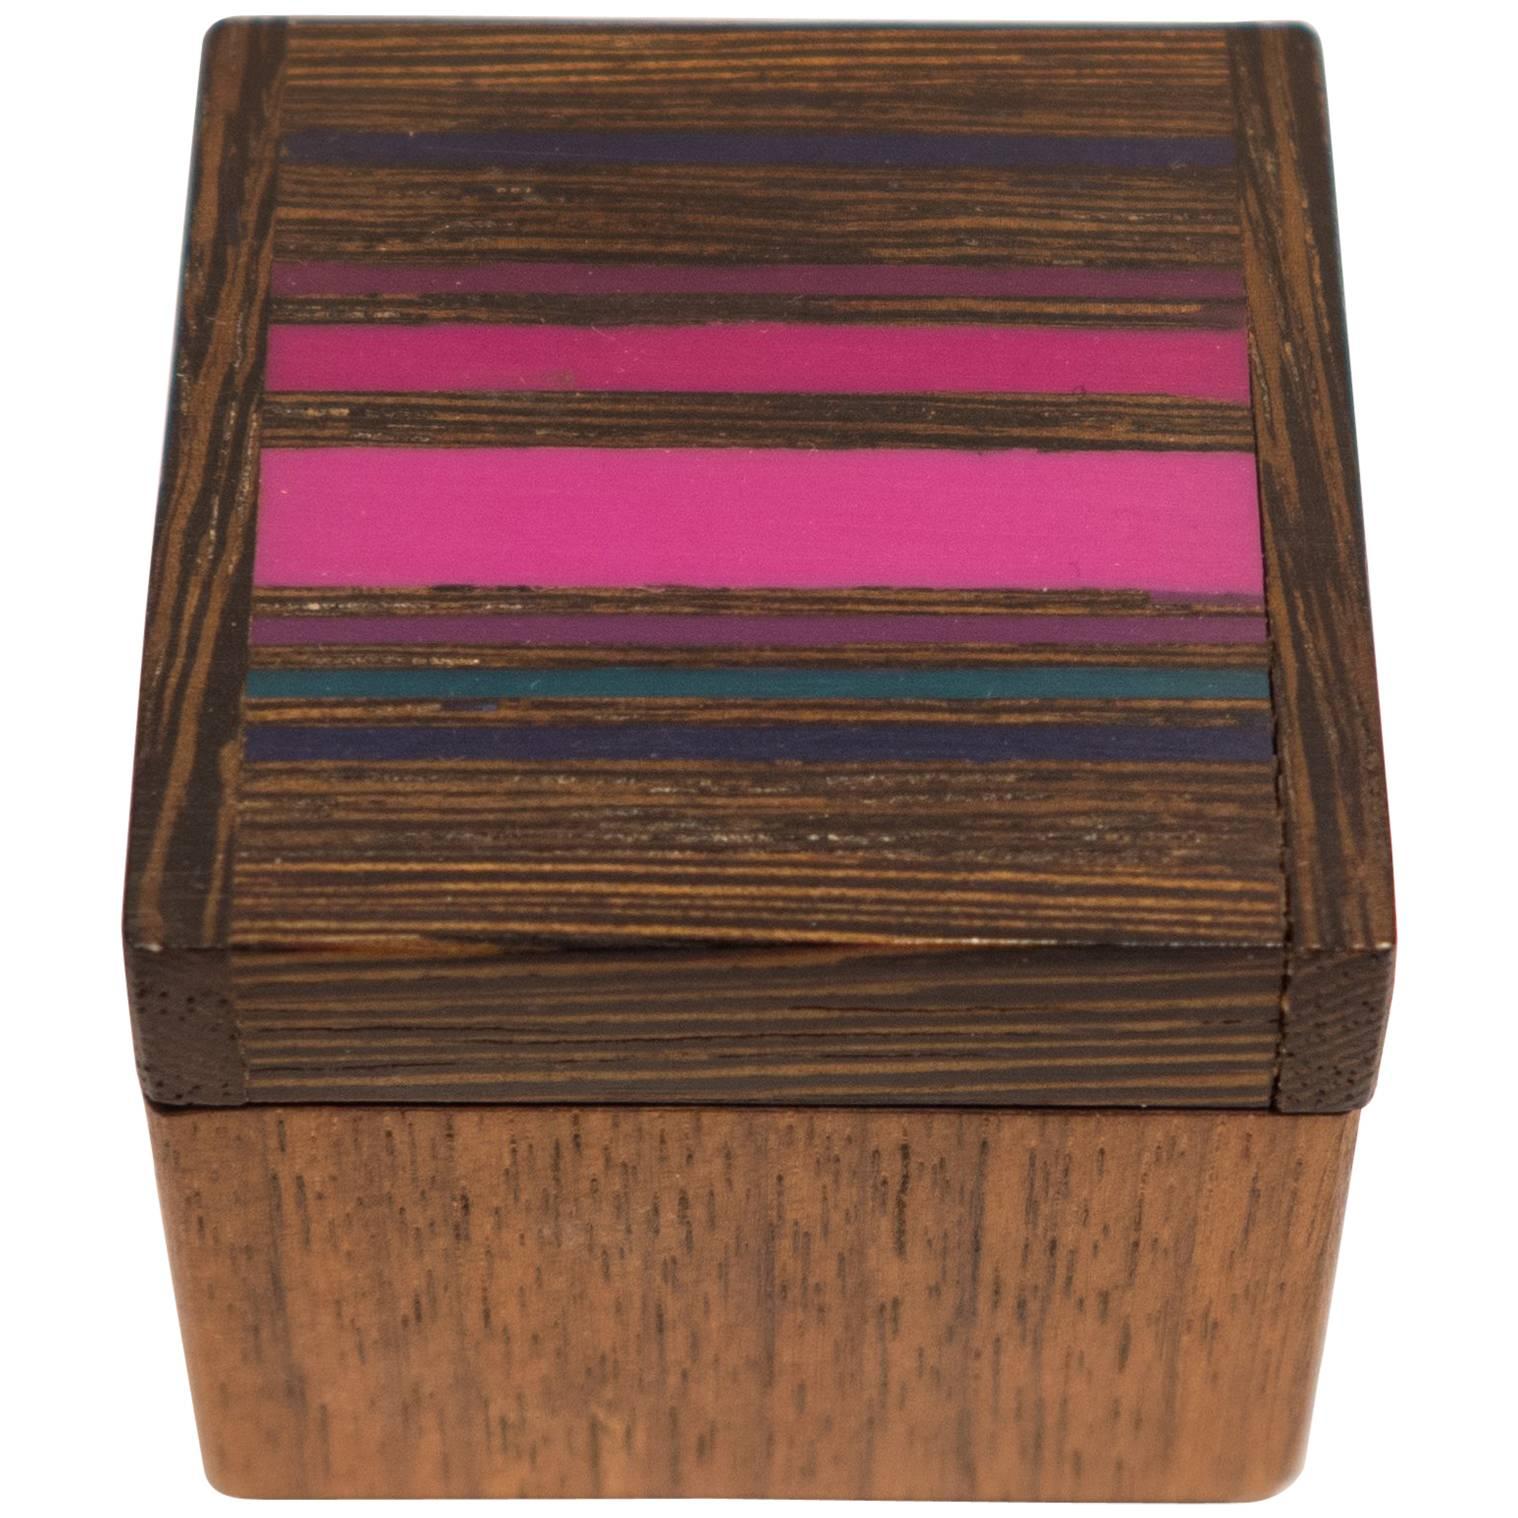 Robert McKeown Stamp Box with Stripes